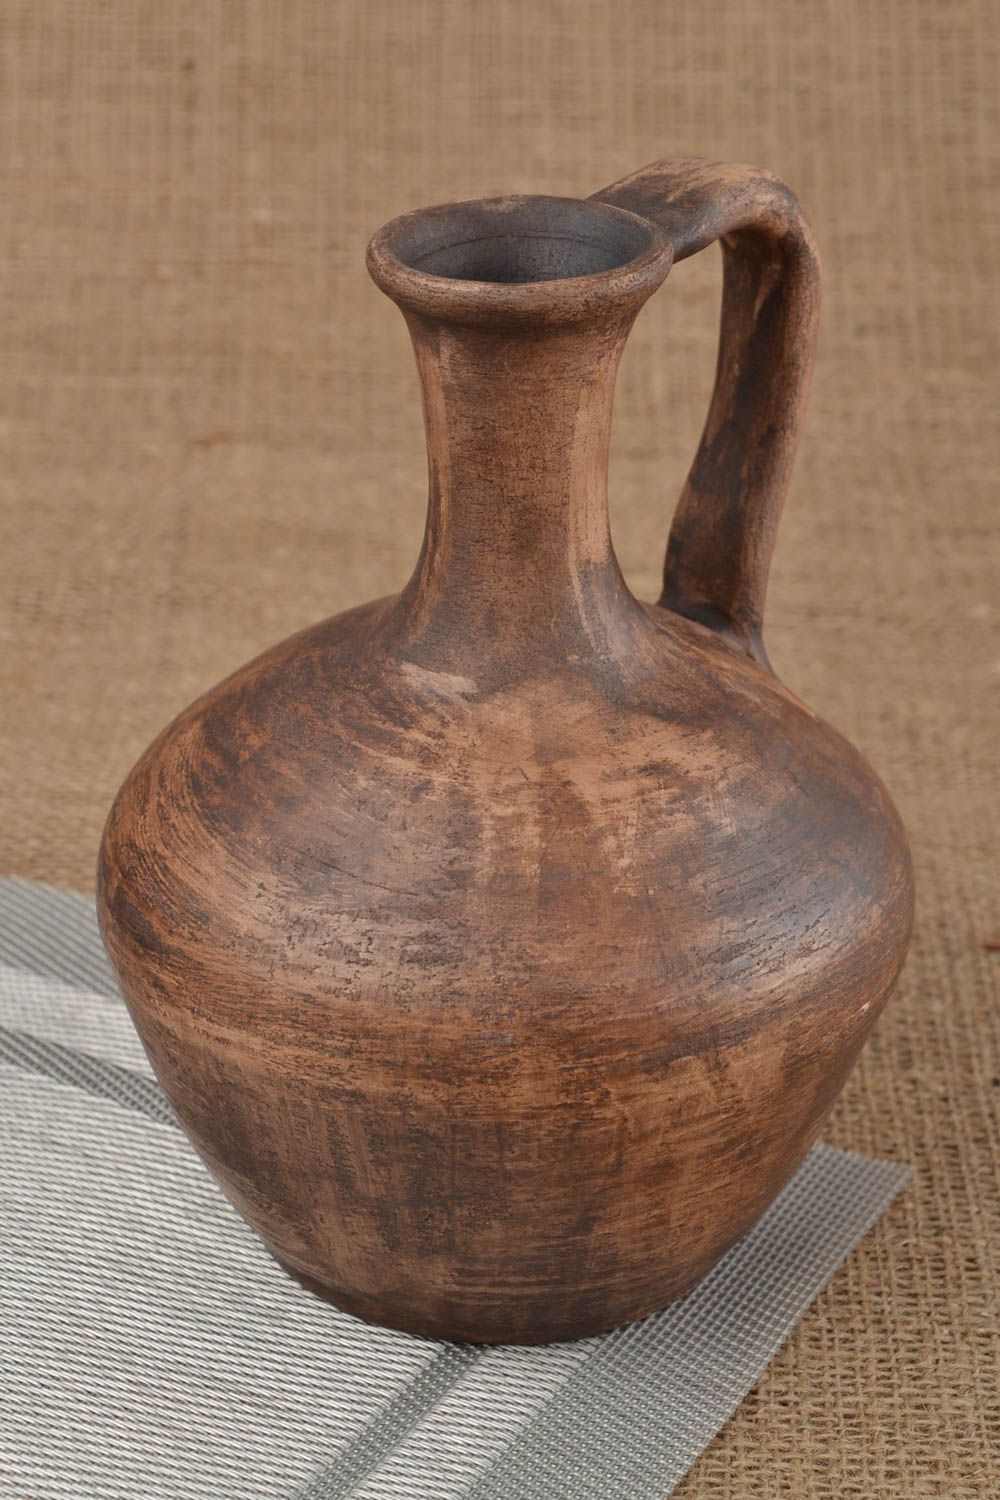 30 oz handmade ceramic wine pitcher carafe with handle 1,2 lb photo 1